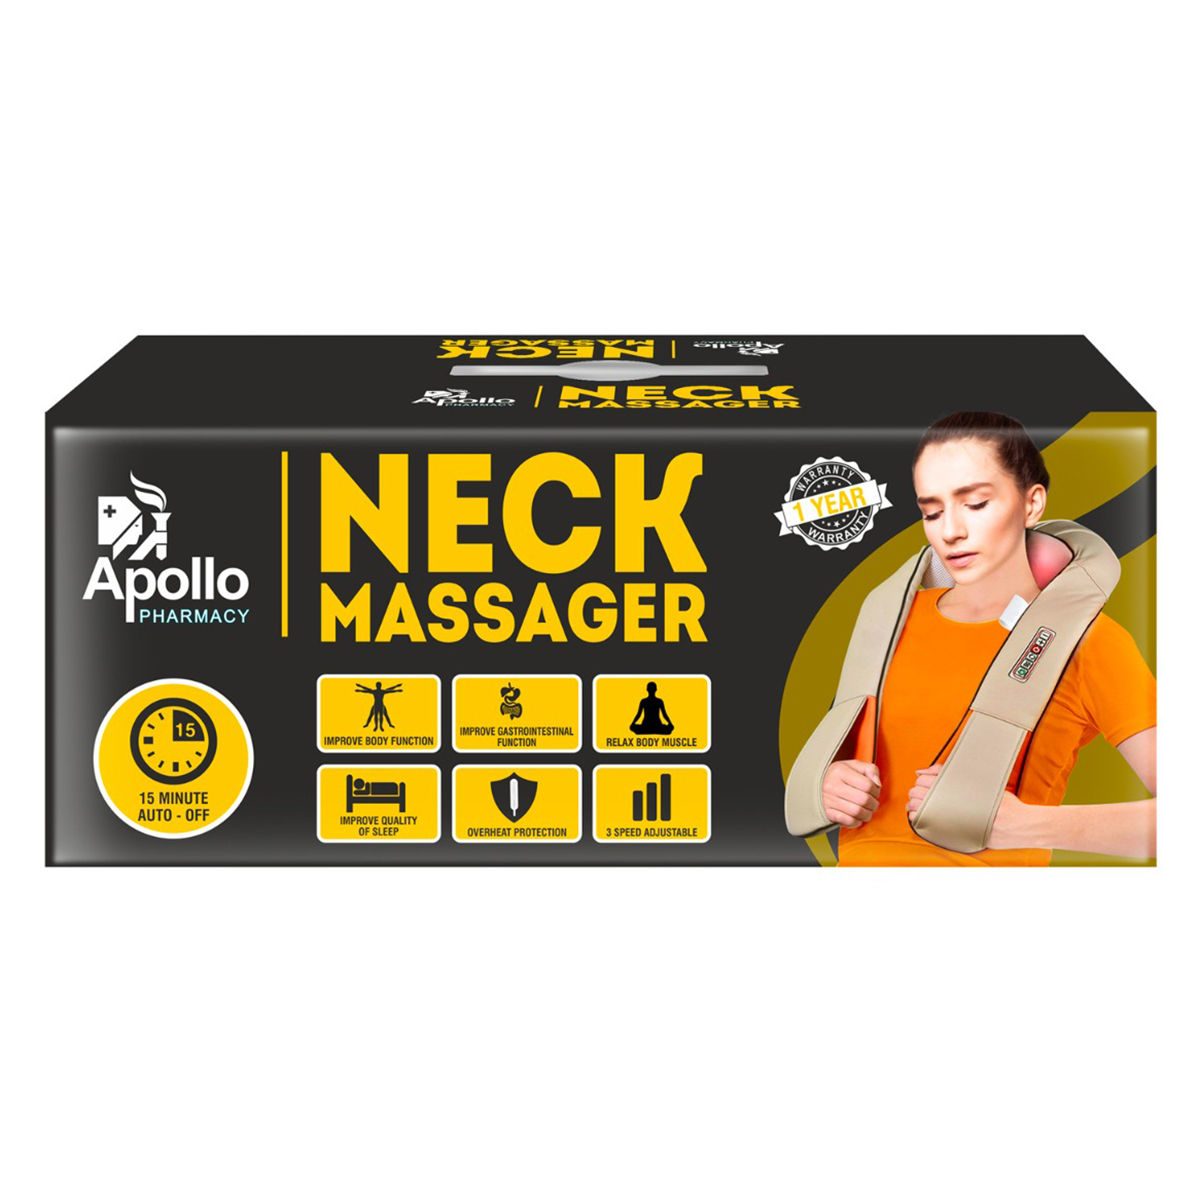 Buy Apollo Pharmacy Neck Massager, 1 Count Online